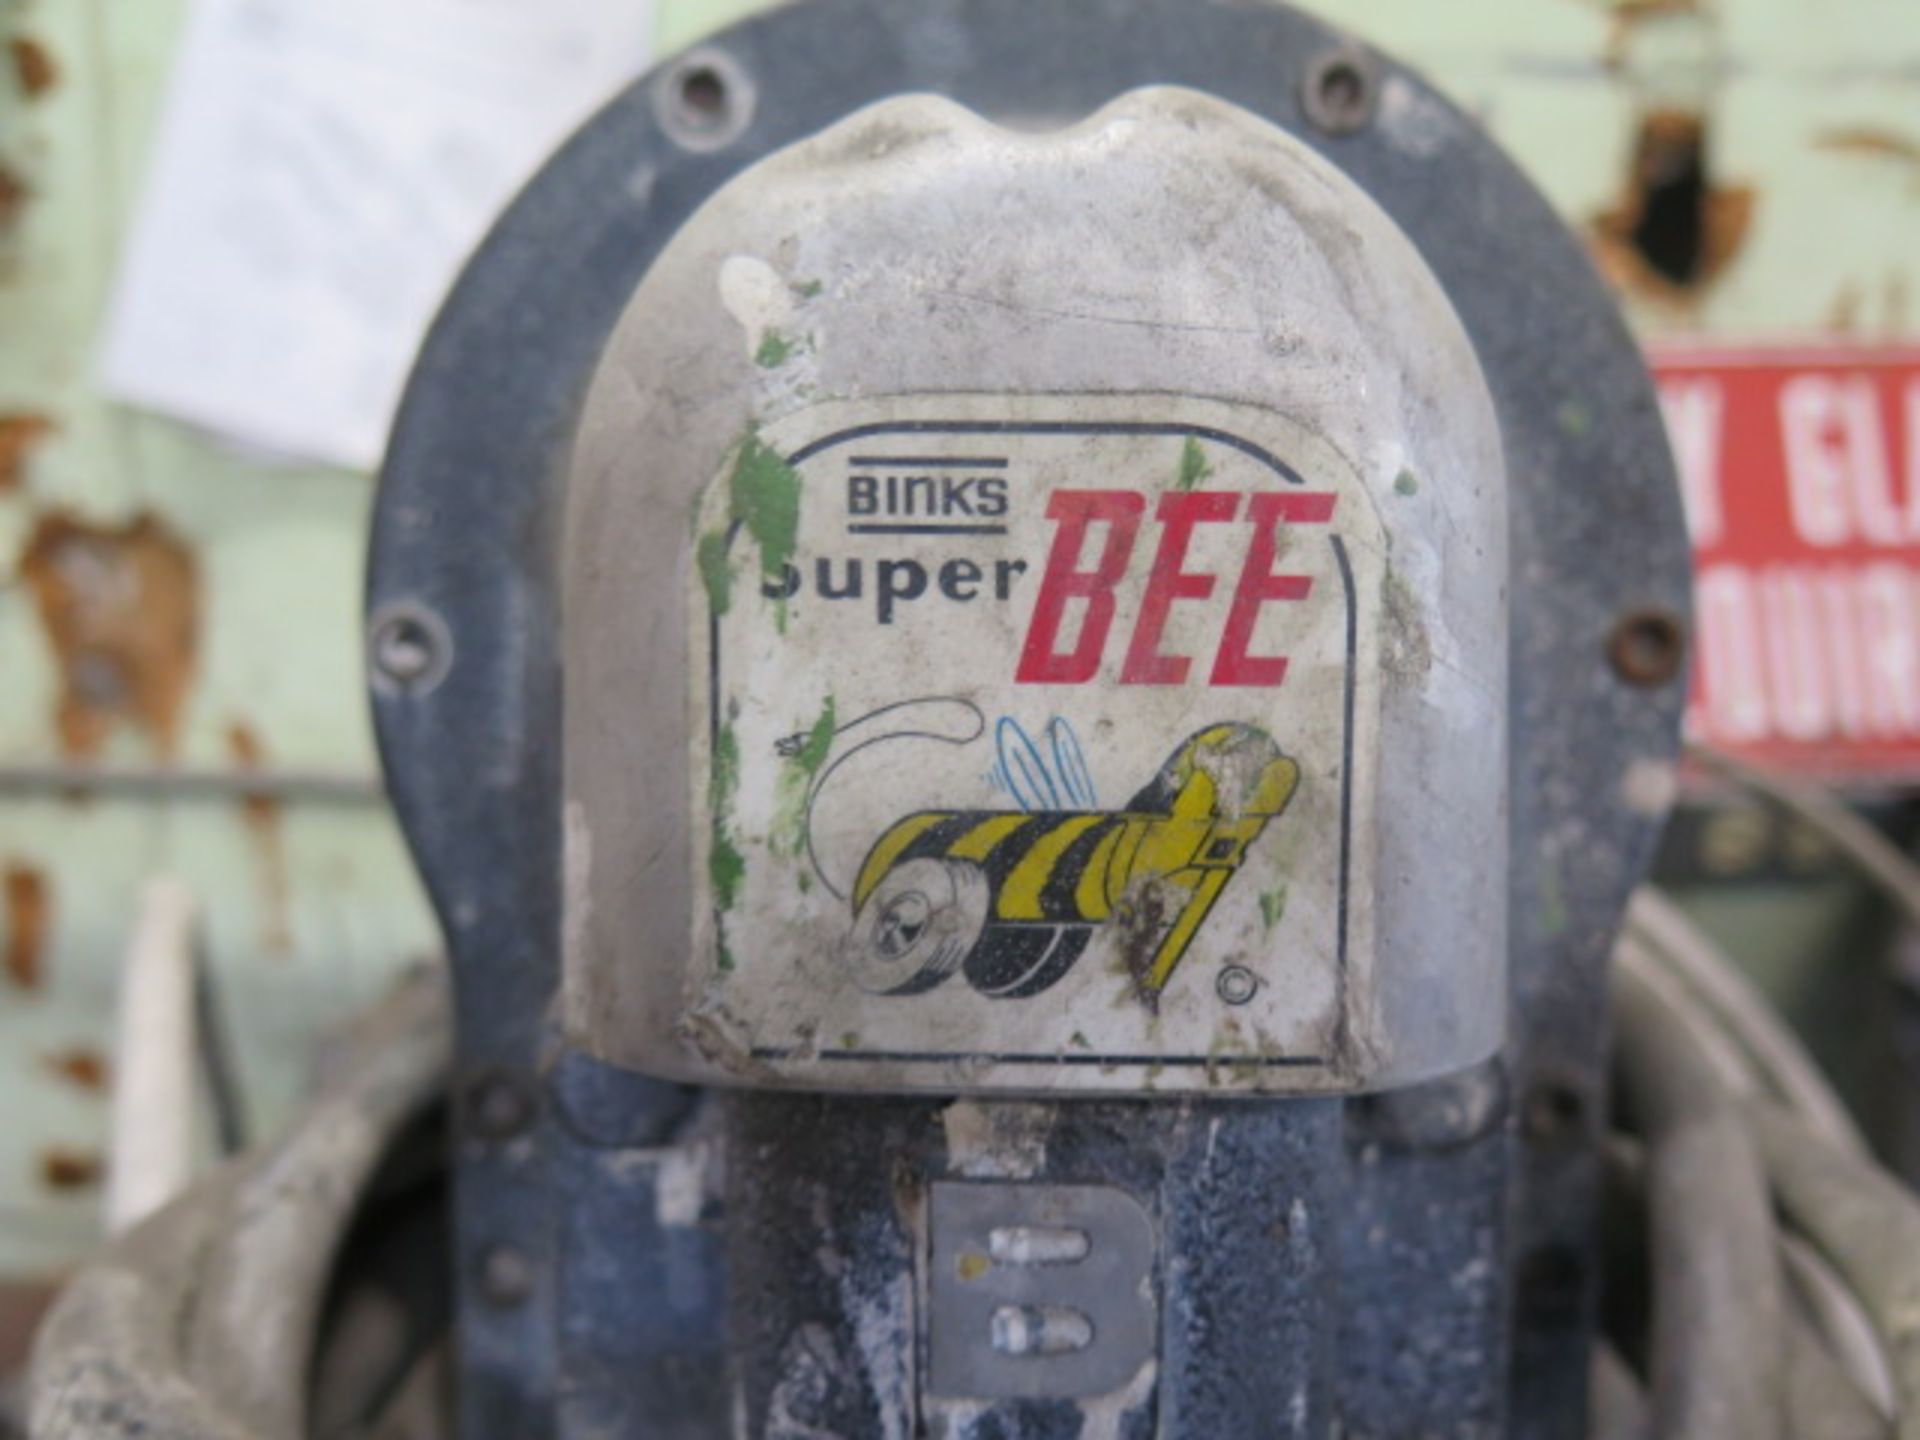 Binks Super Bee Paint Sprayer (SOLD AS-IS - NO WARRANTY) - Image 6 of 6